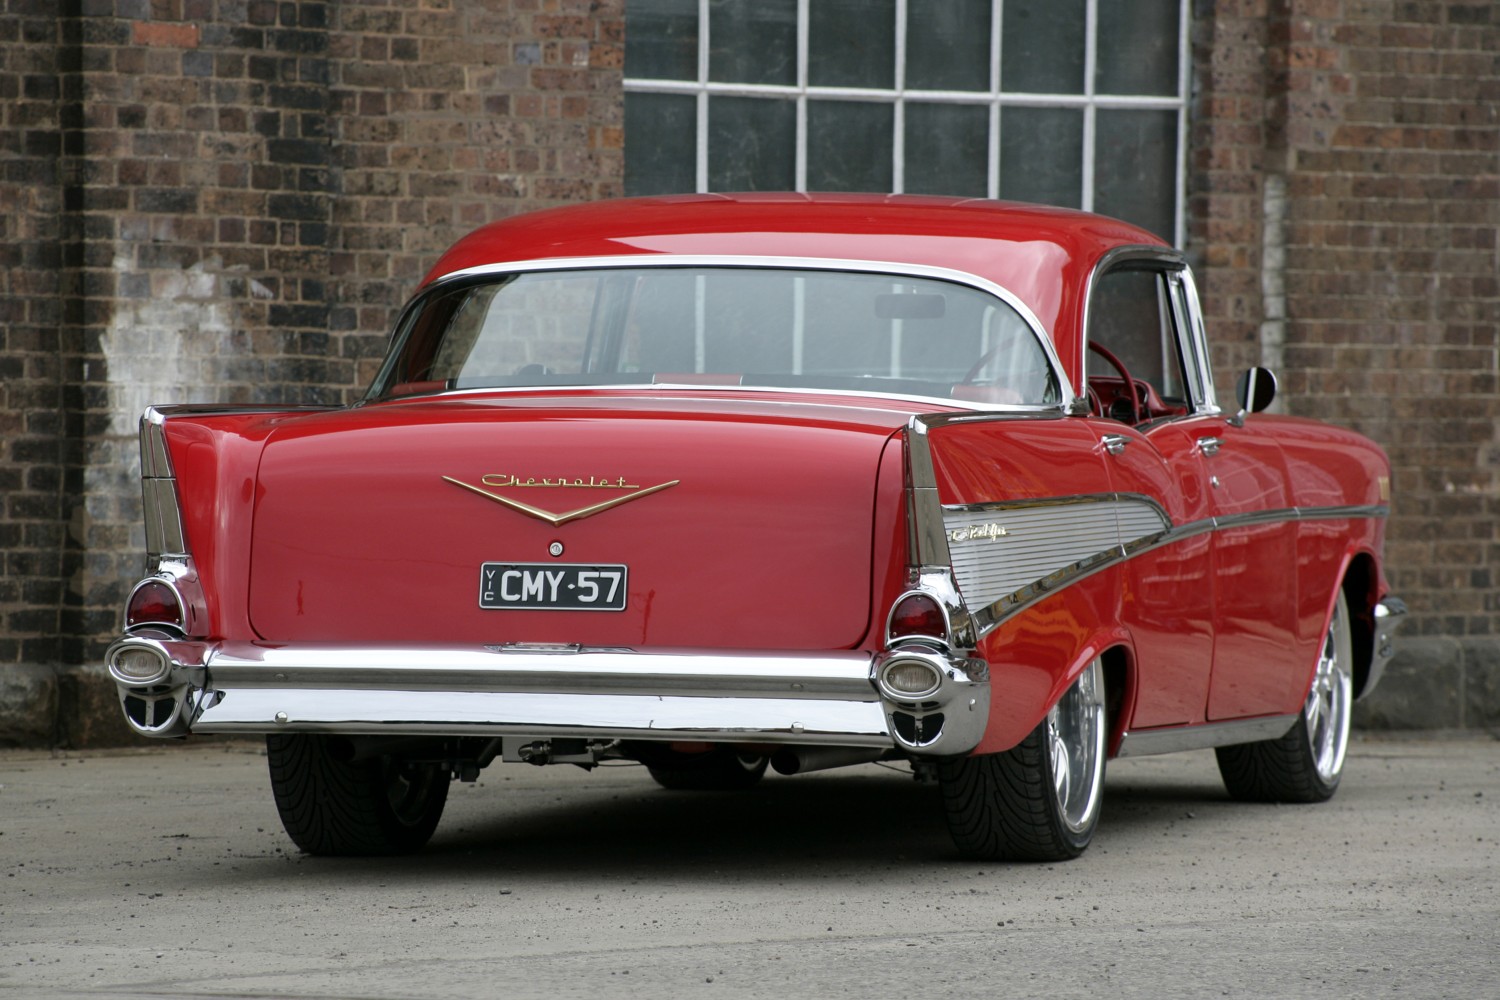 1957 Chevrolet BELAIR cmy057 Shannons Club